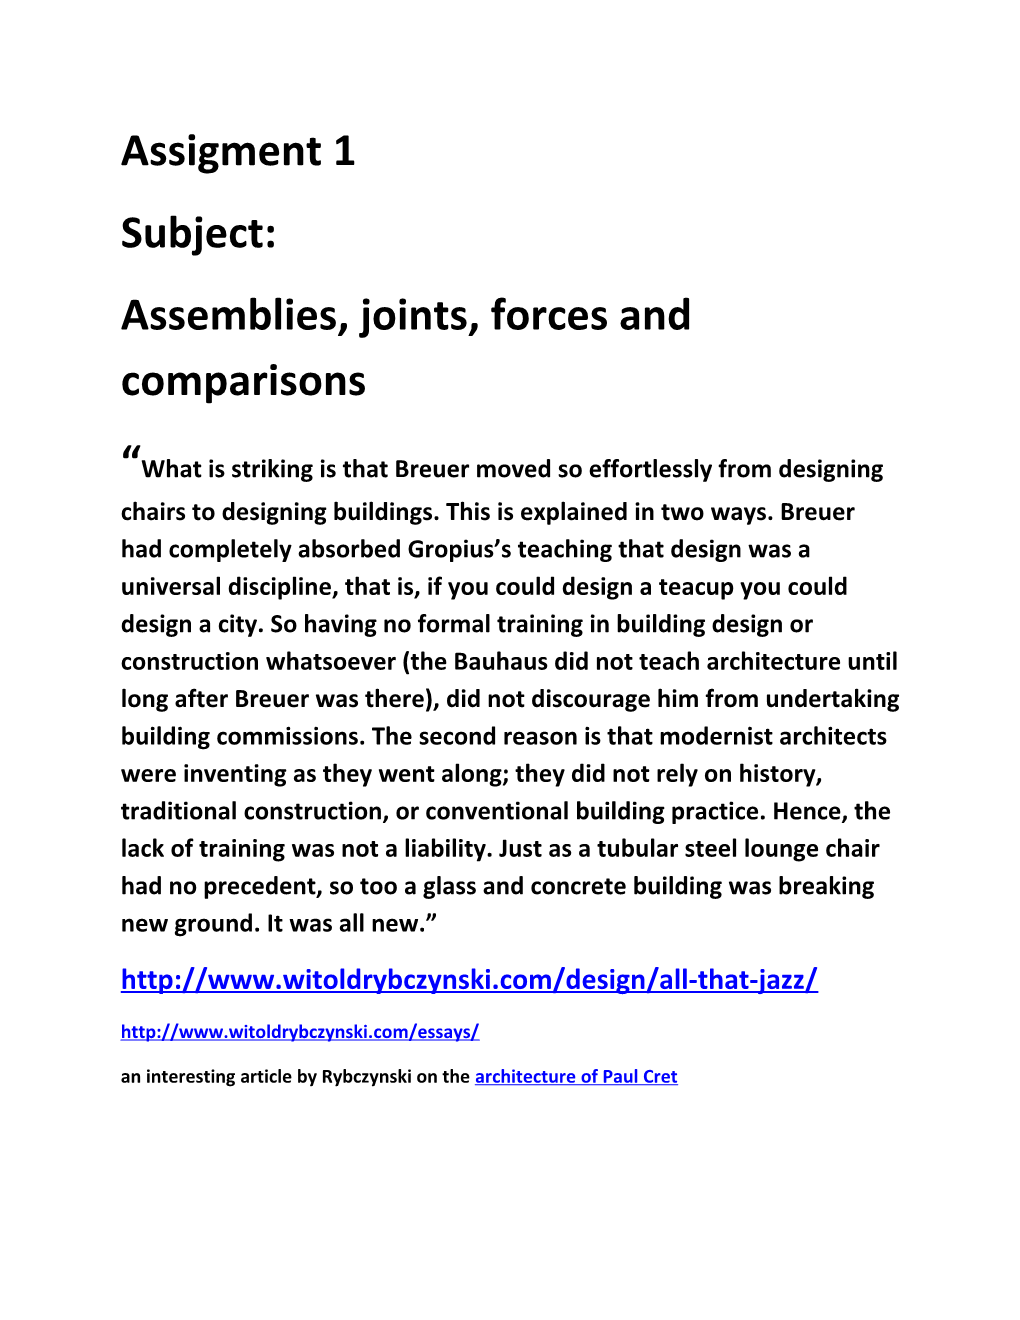 Assemblies, Joints, Forces and Comparisons